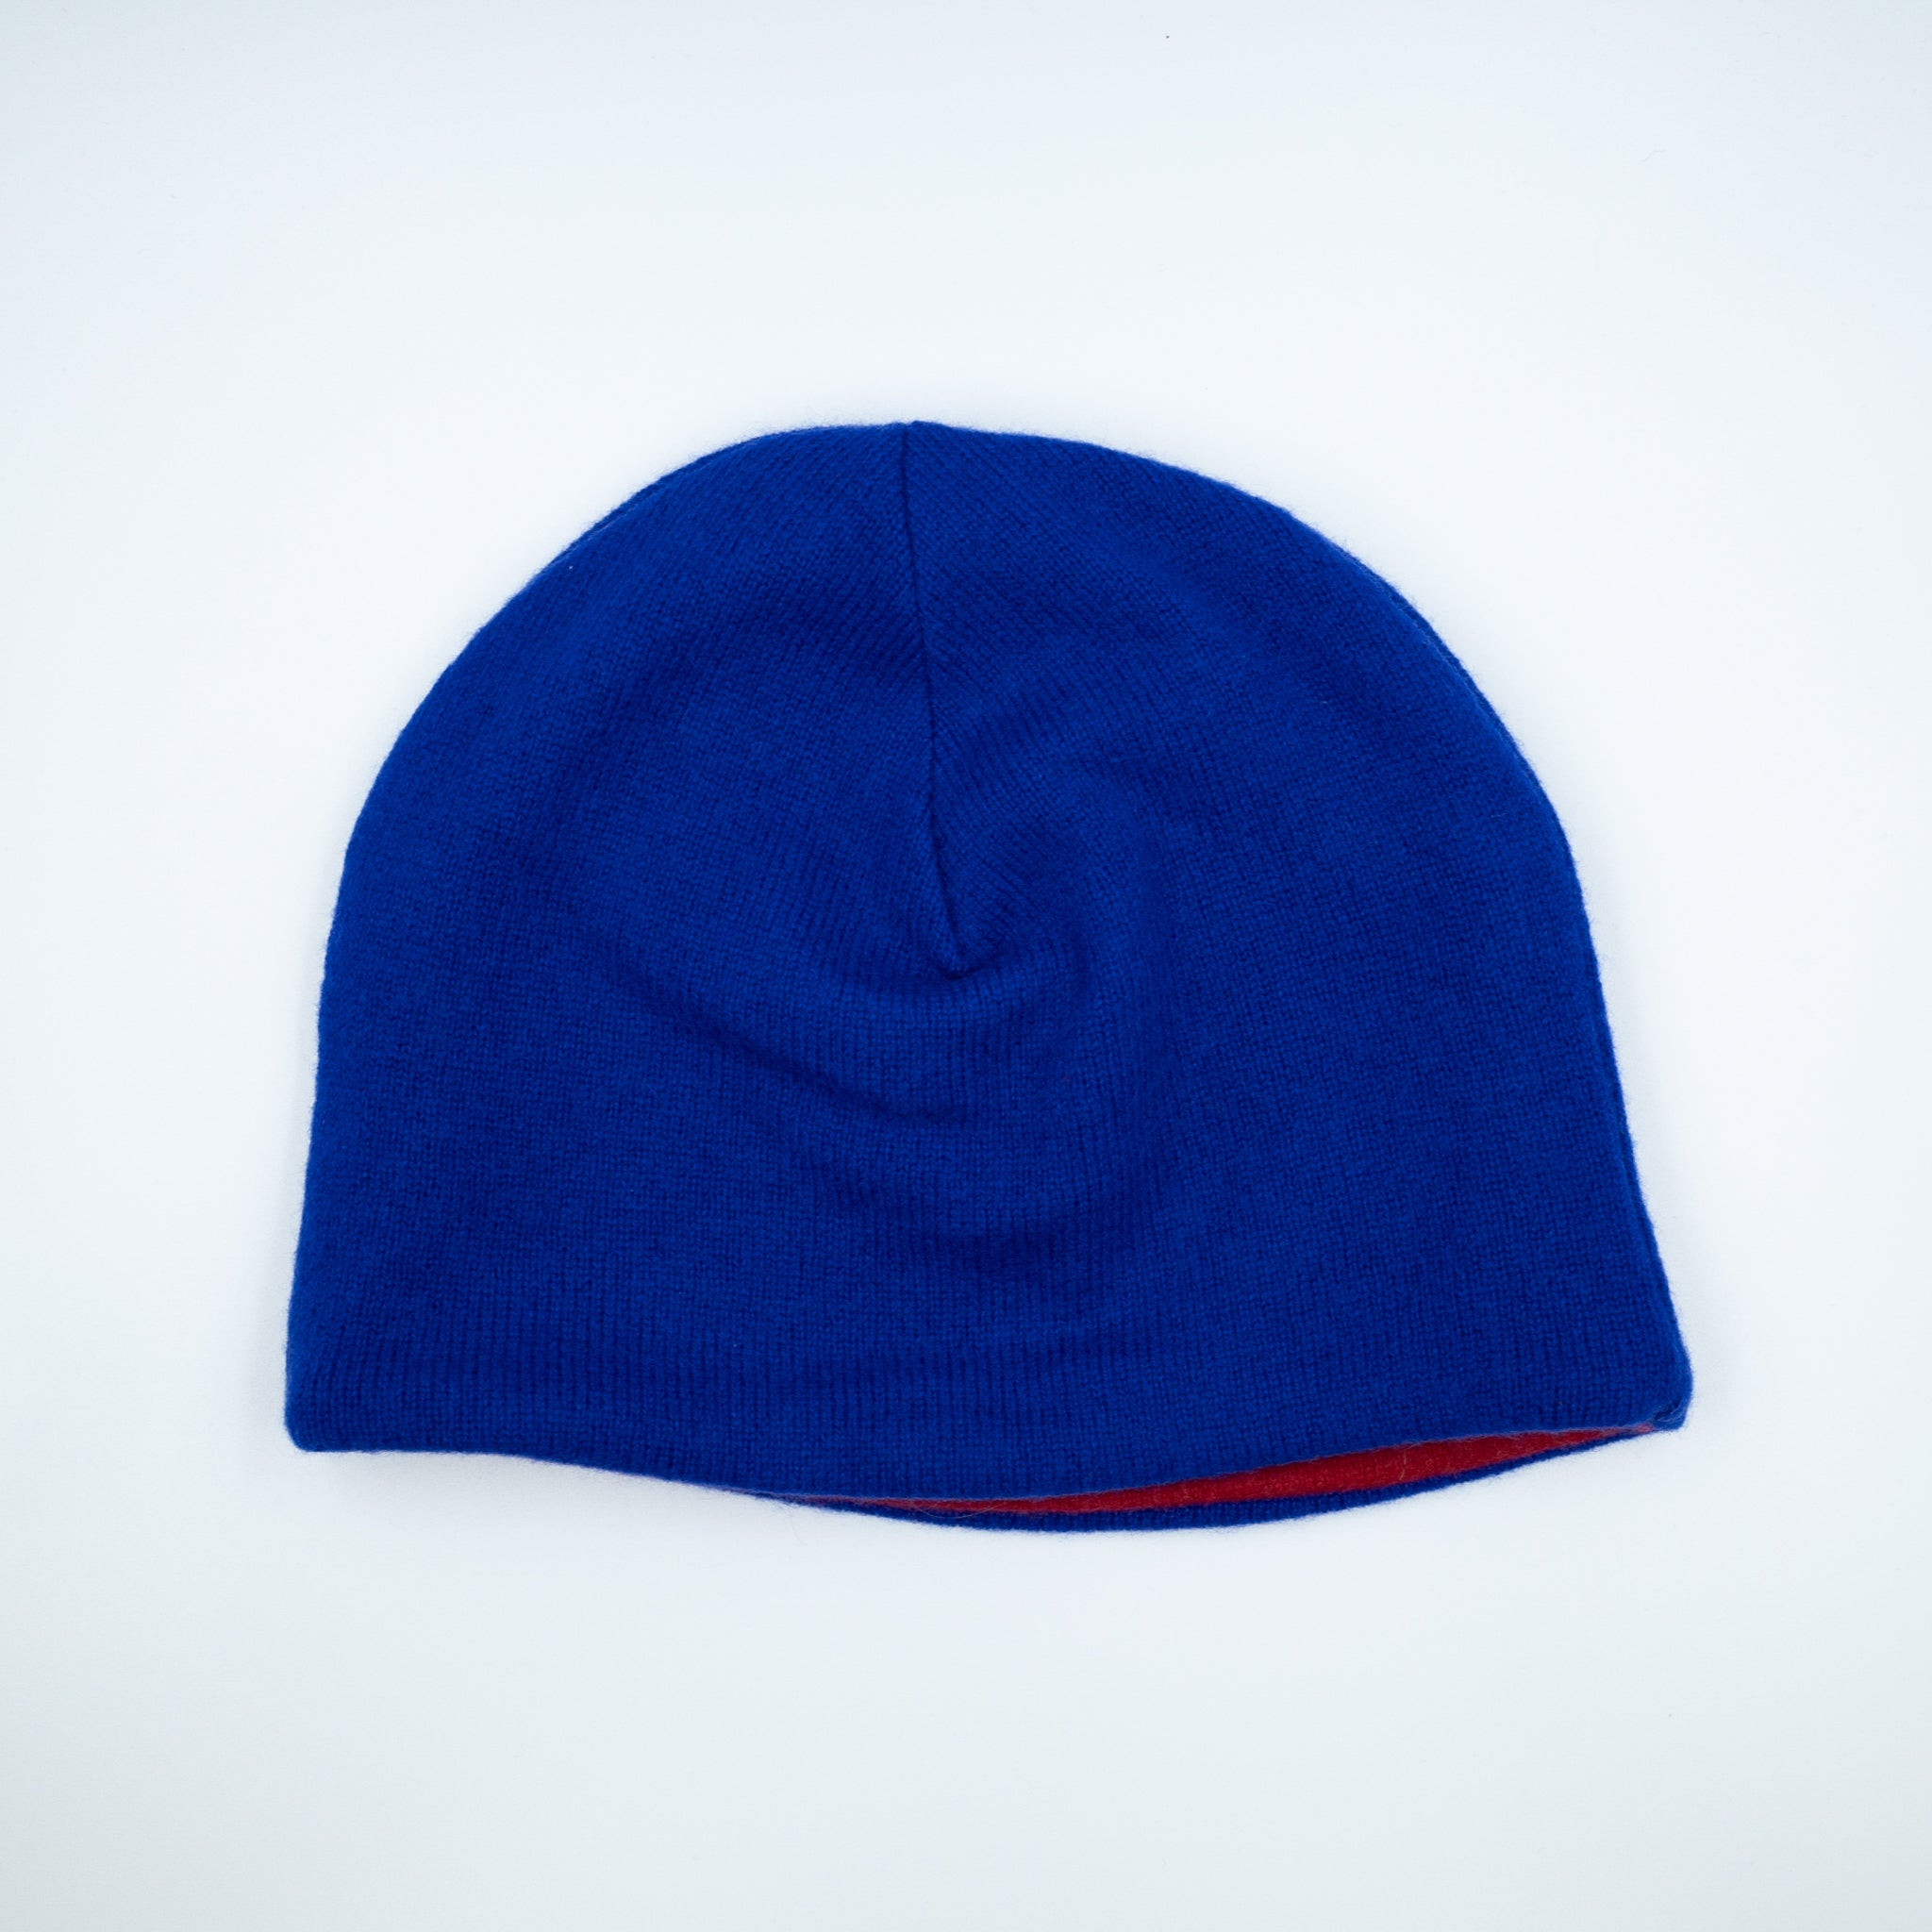 Indigo Blue and Post Box Red Cashmere Beanie Hat